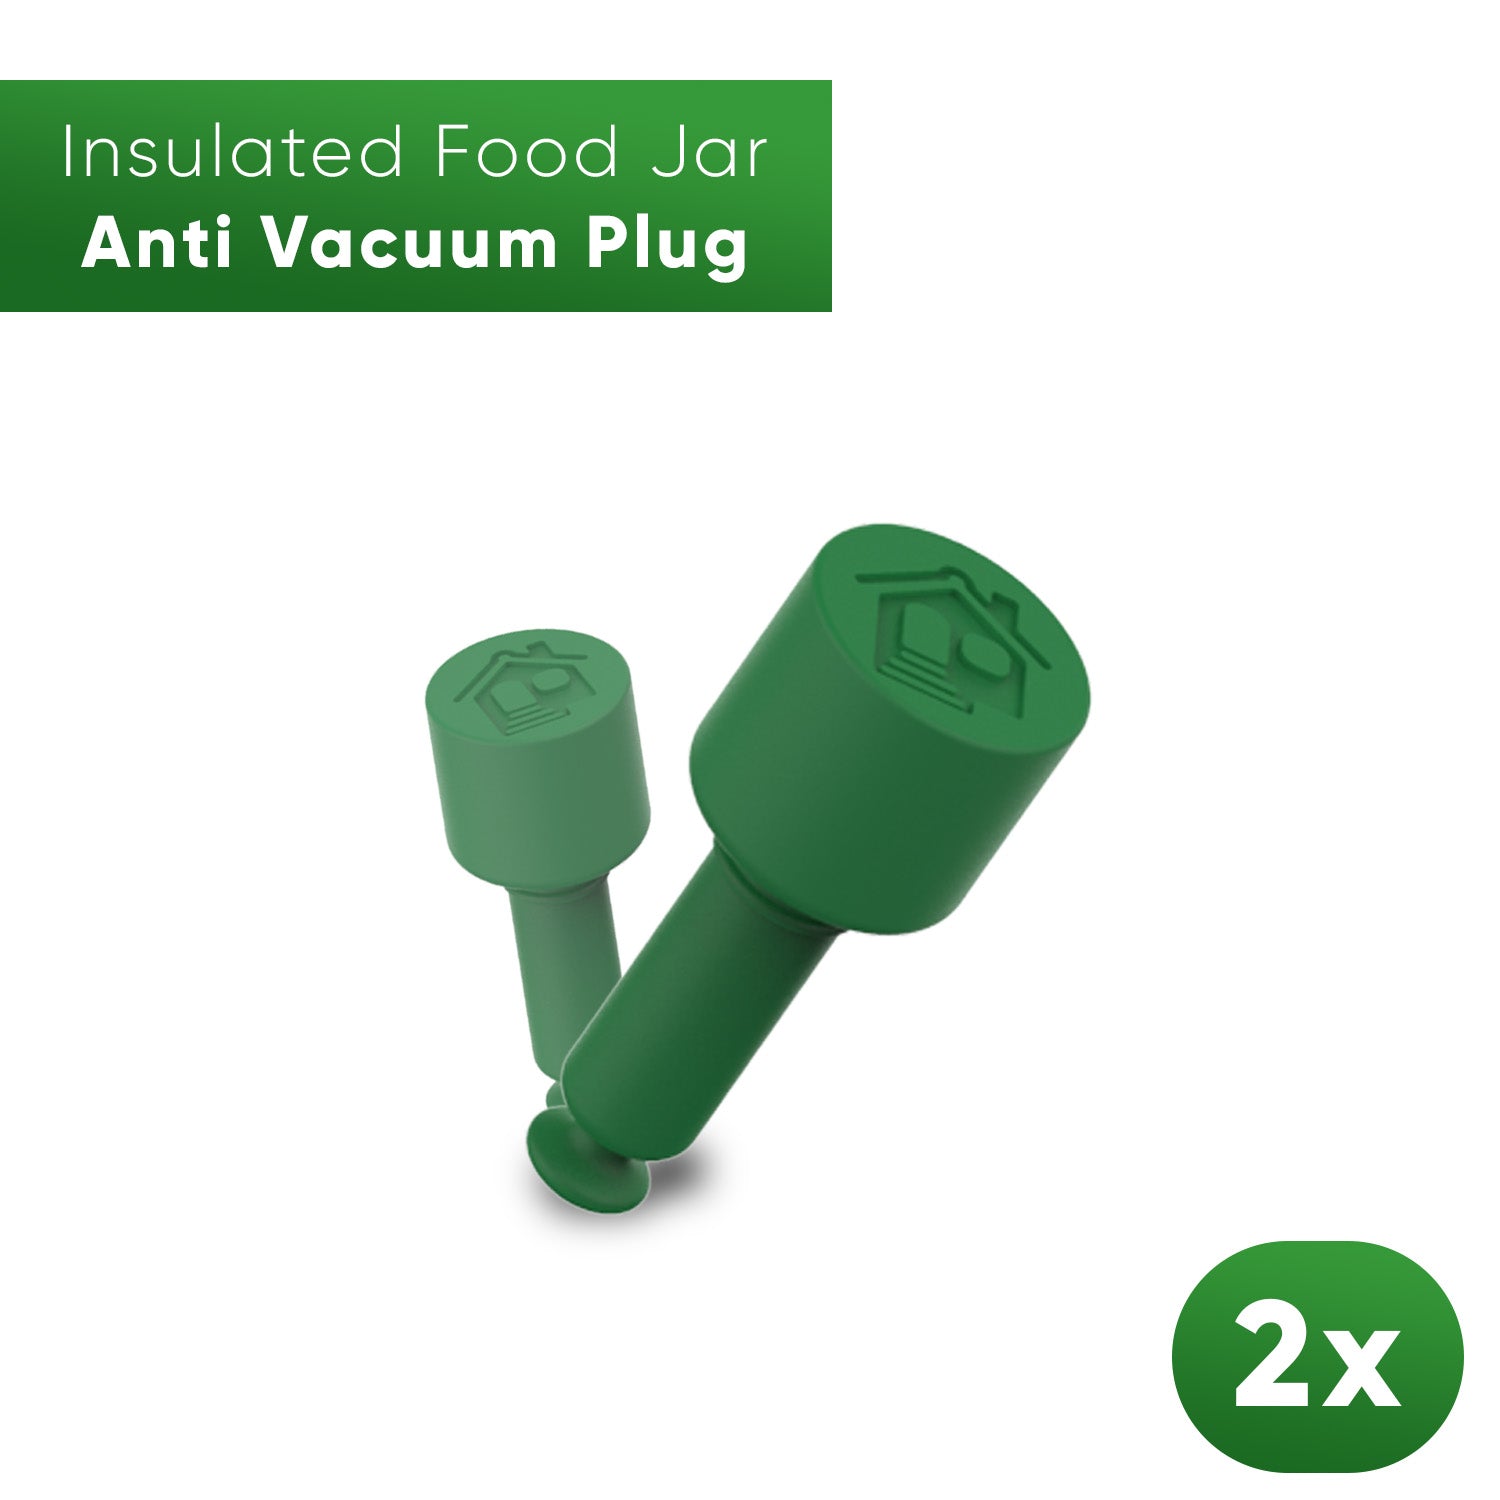 Insulated Food Jar - Plug